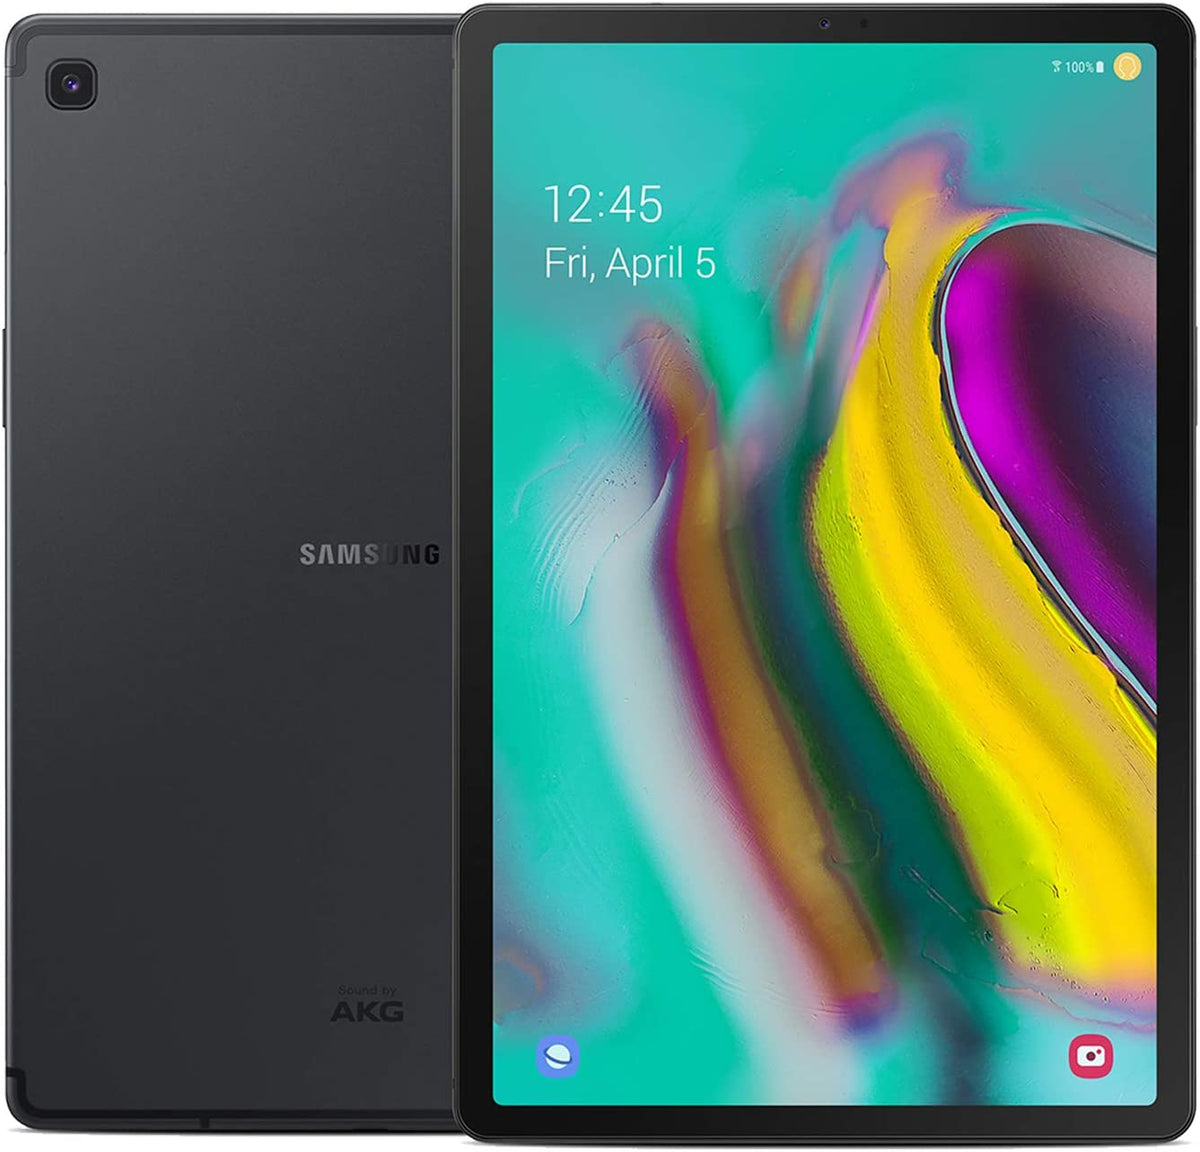 Best Buy: Samsung Galaxy Tab A (2019) 10.1 32GB Black SM-T510NZKAXAR